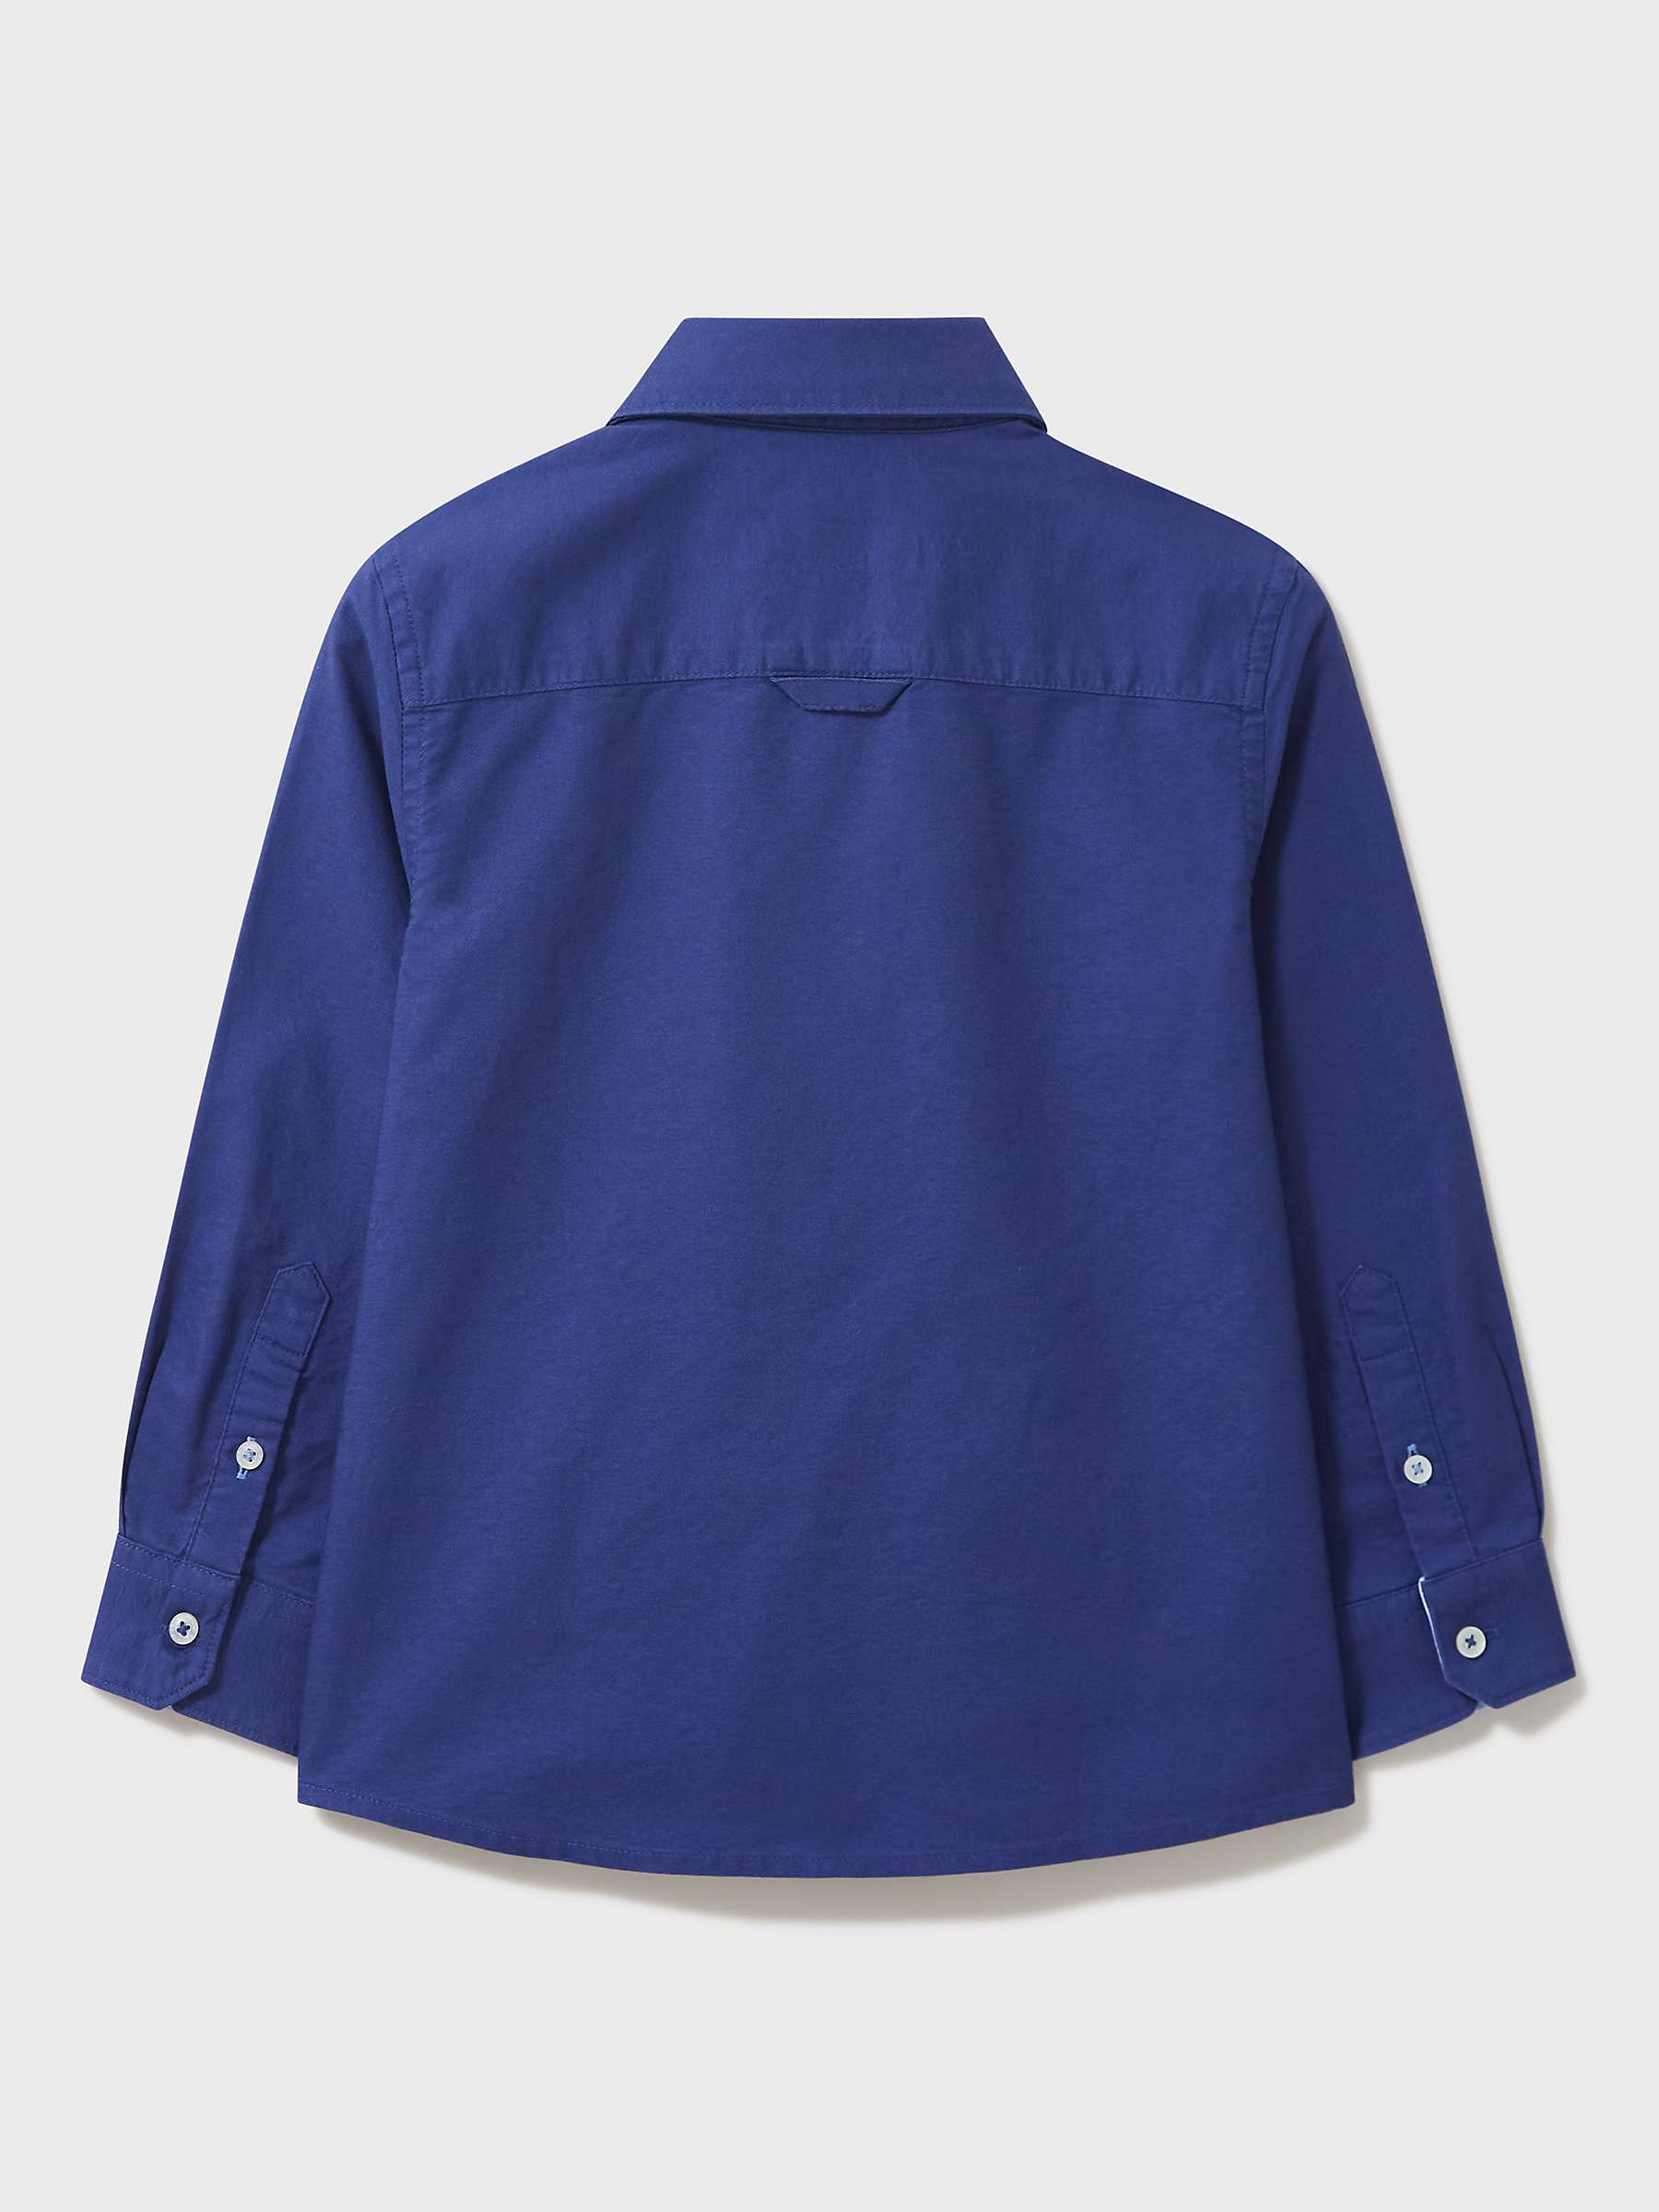 Buy Crew Clothing Kids' Mini-Me Oxford Shirt, Navy Blue Online at johnlewis.com